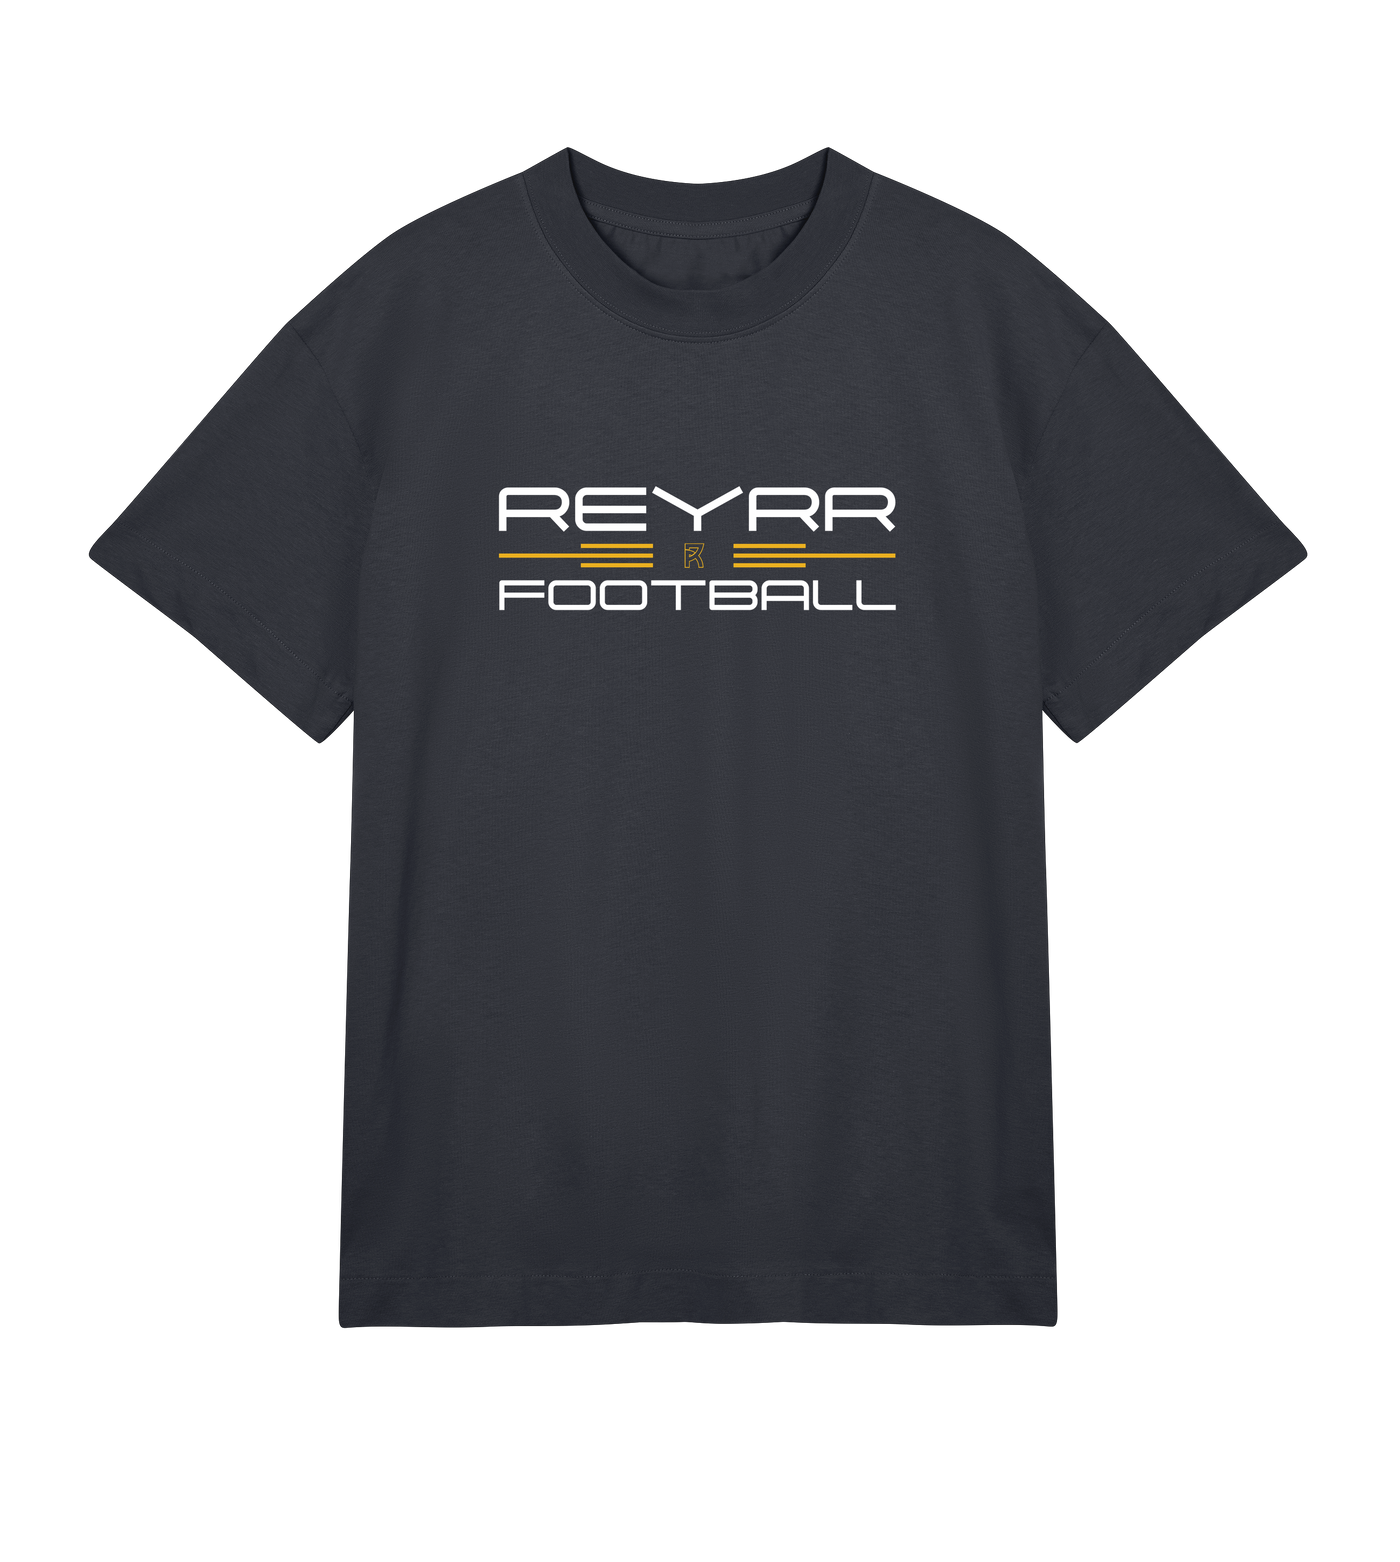 Reyrr Football Boxy T-shirt - Premium t-shirt from REYRR STUDIO - Shop now at Reyrr Athletics